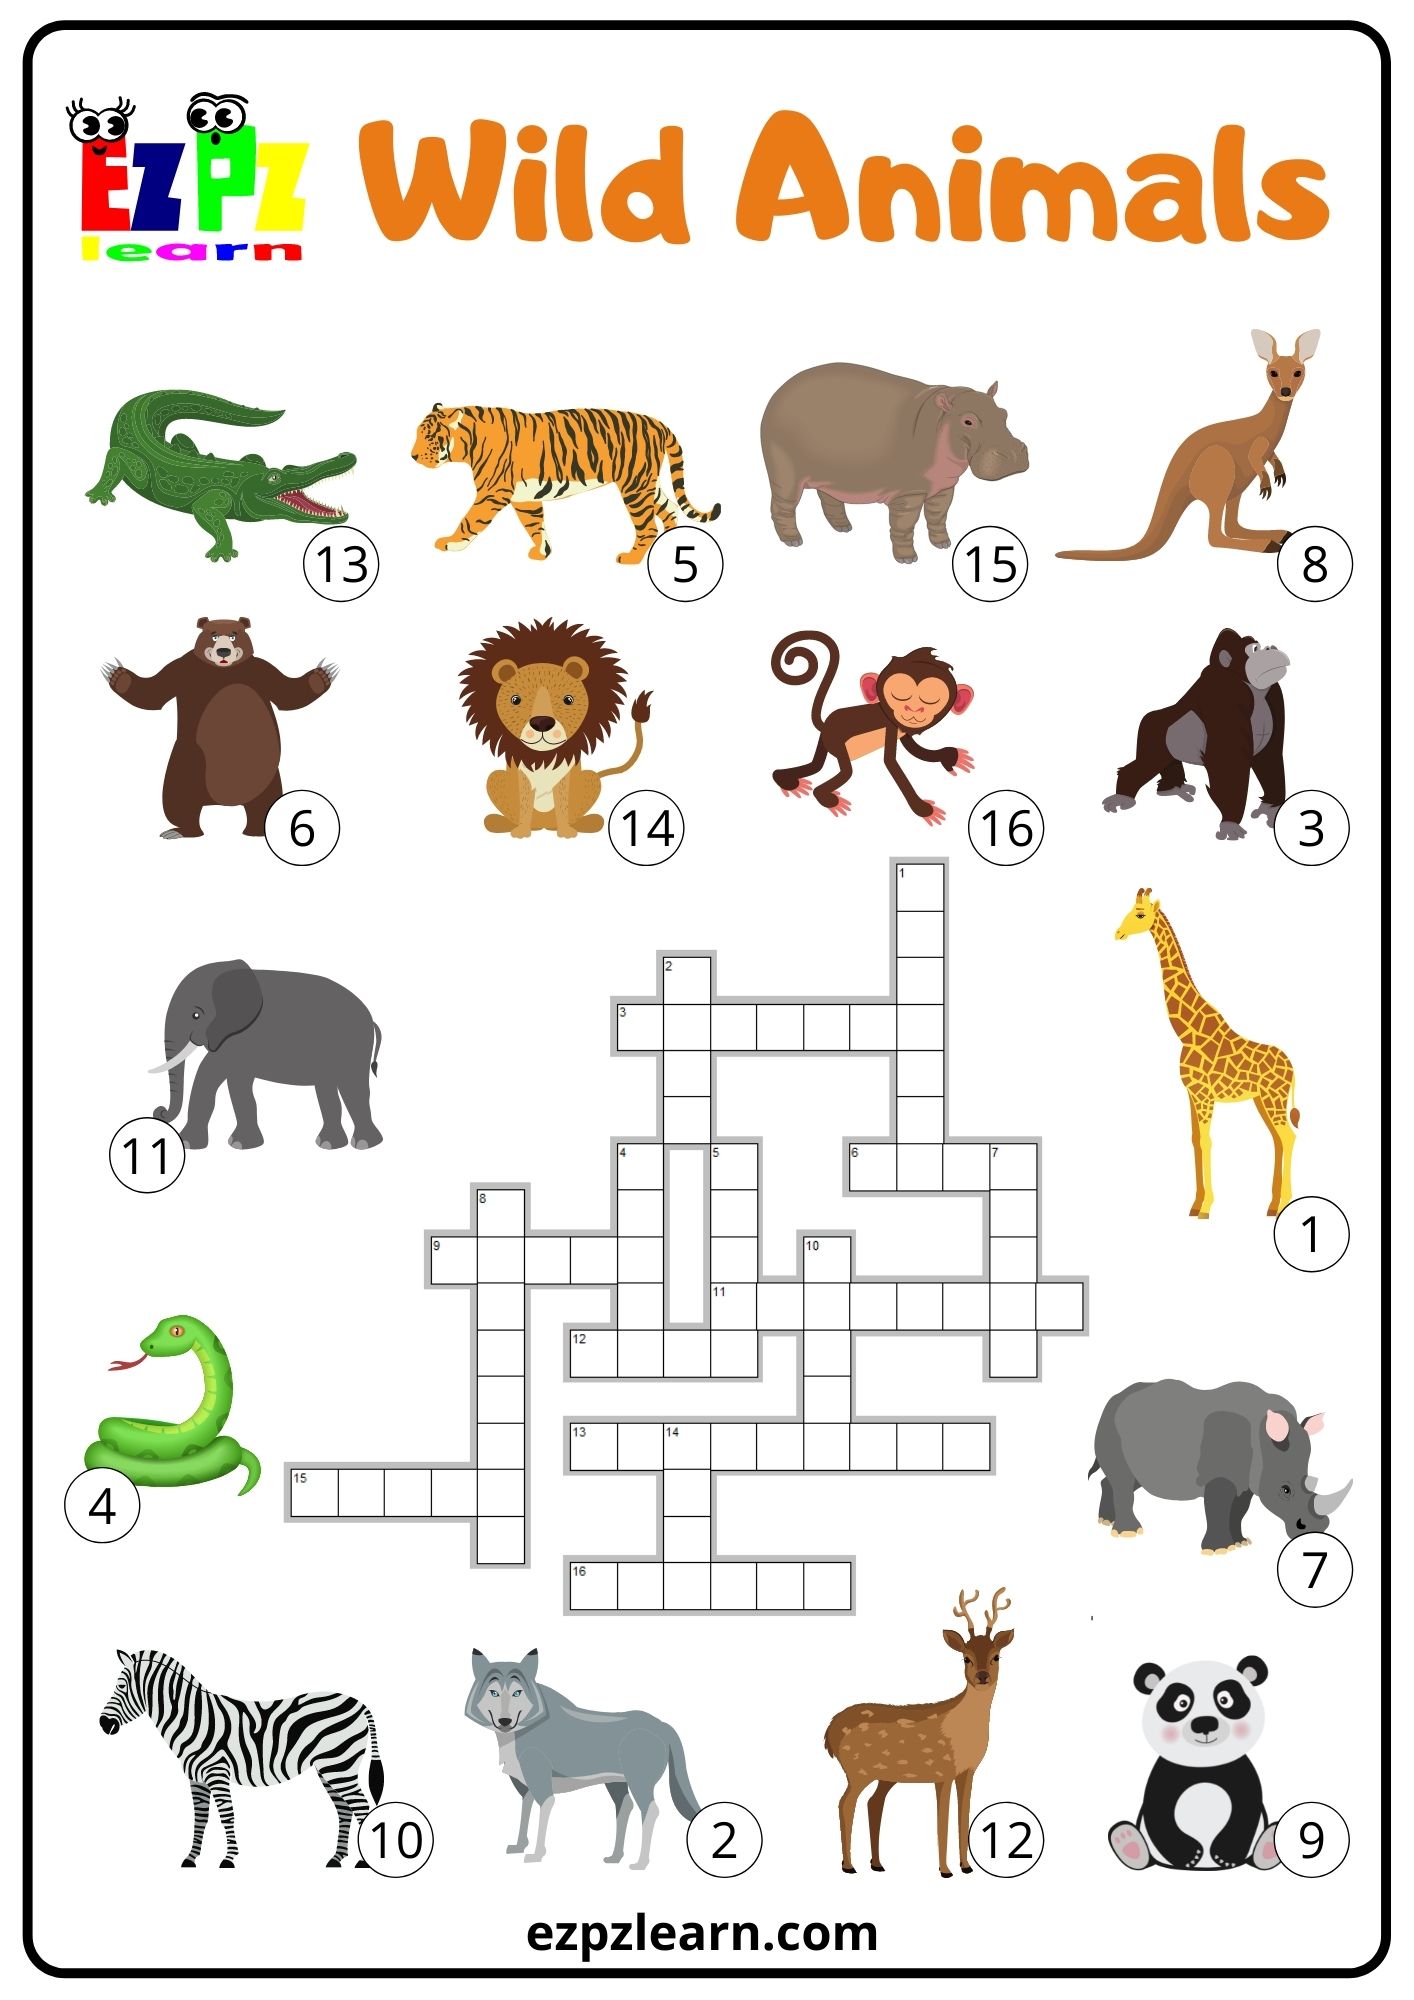 Wild Animals Crossword 